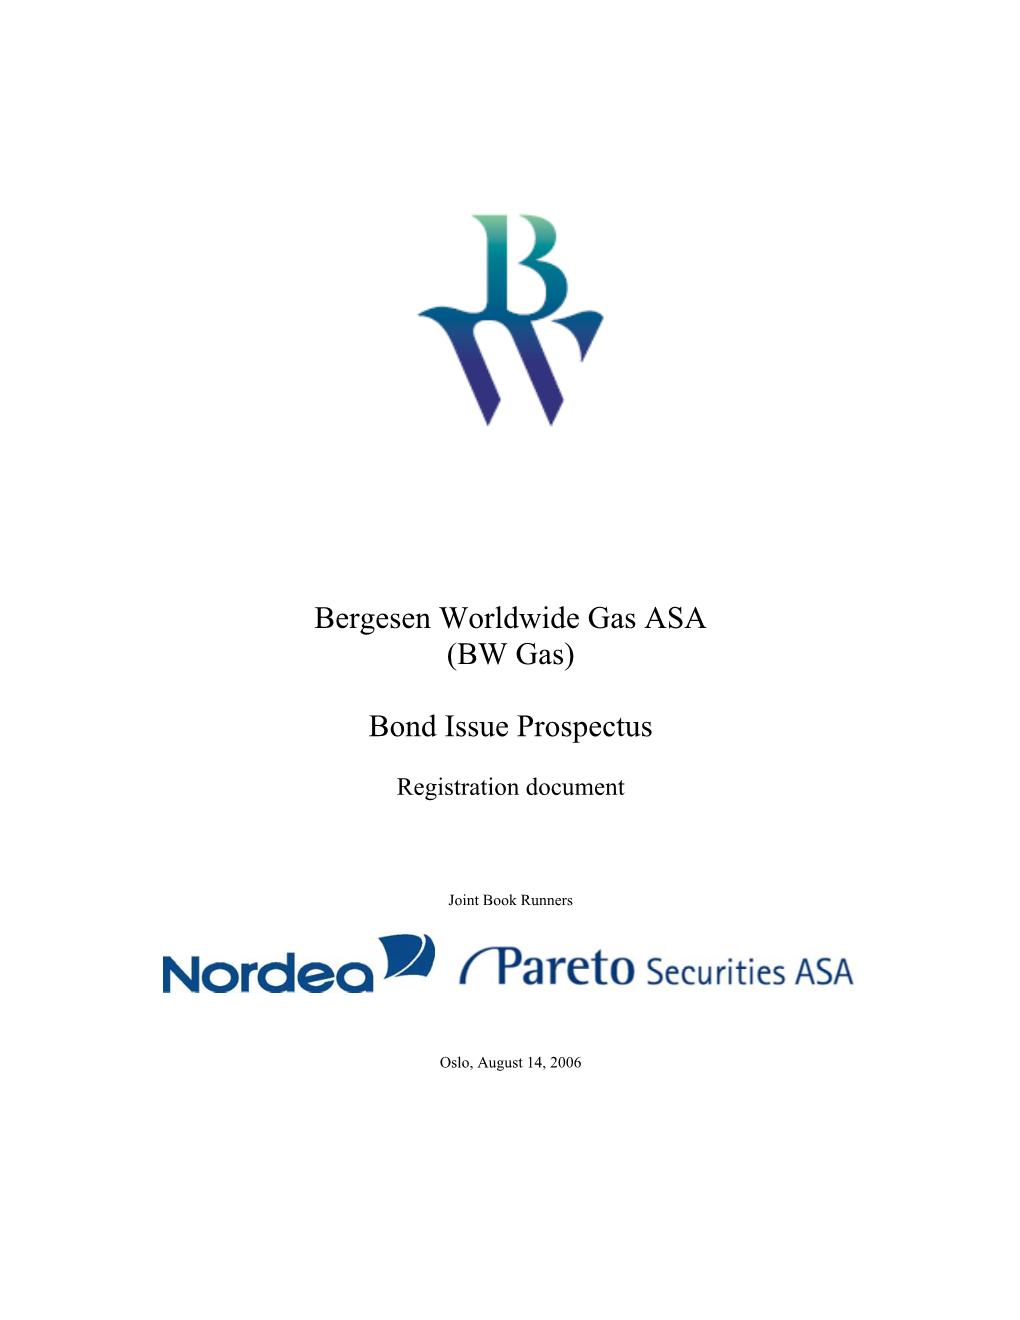 Bergesen Worldwide Gas ASA (BW Gas) Bond Issue Prospectus